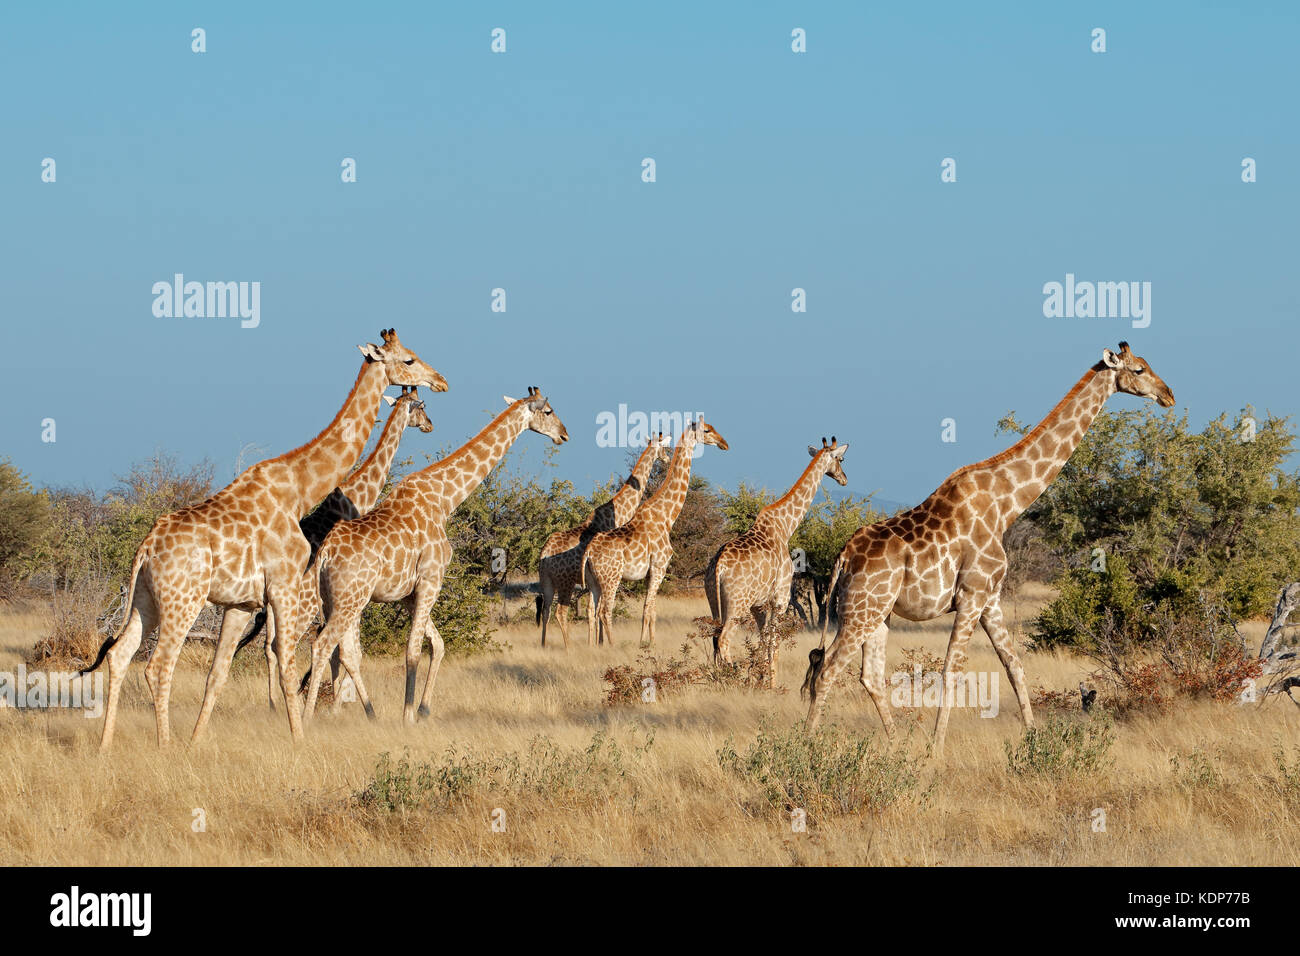 Jirafas (Giraffa camelopardalis) en su hábitat natural, el Parque Nacional de Etosha, Namibia Foto de stock